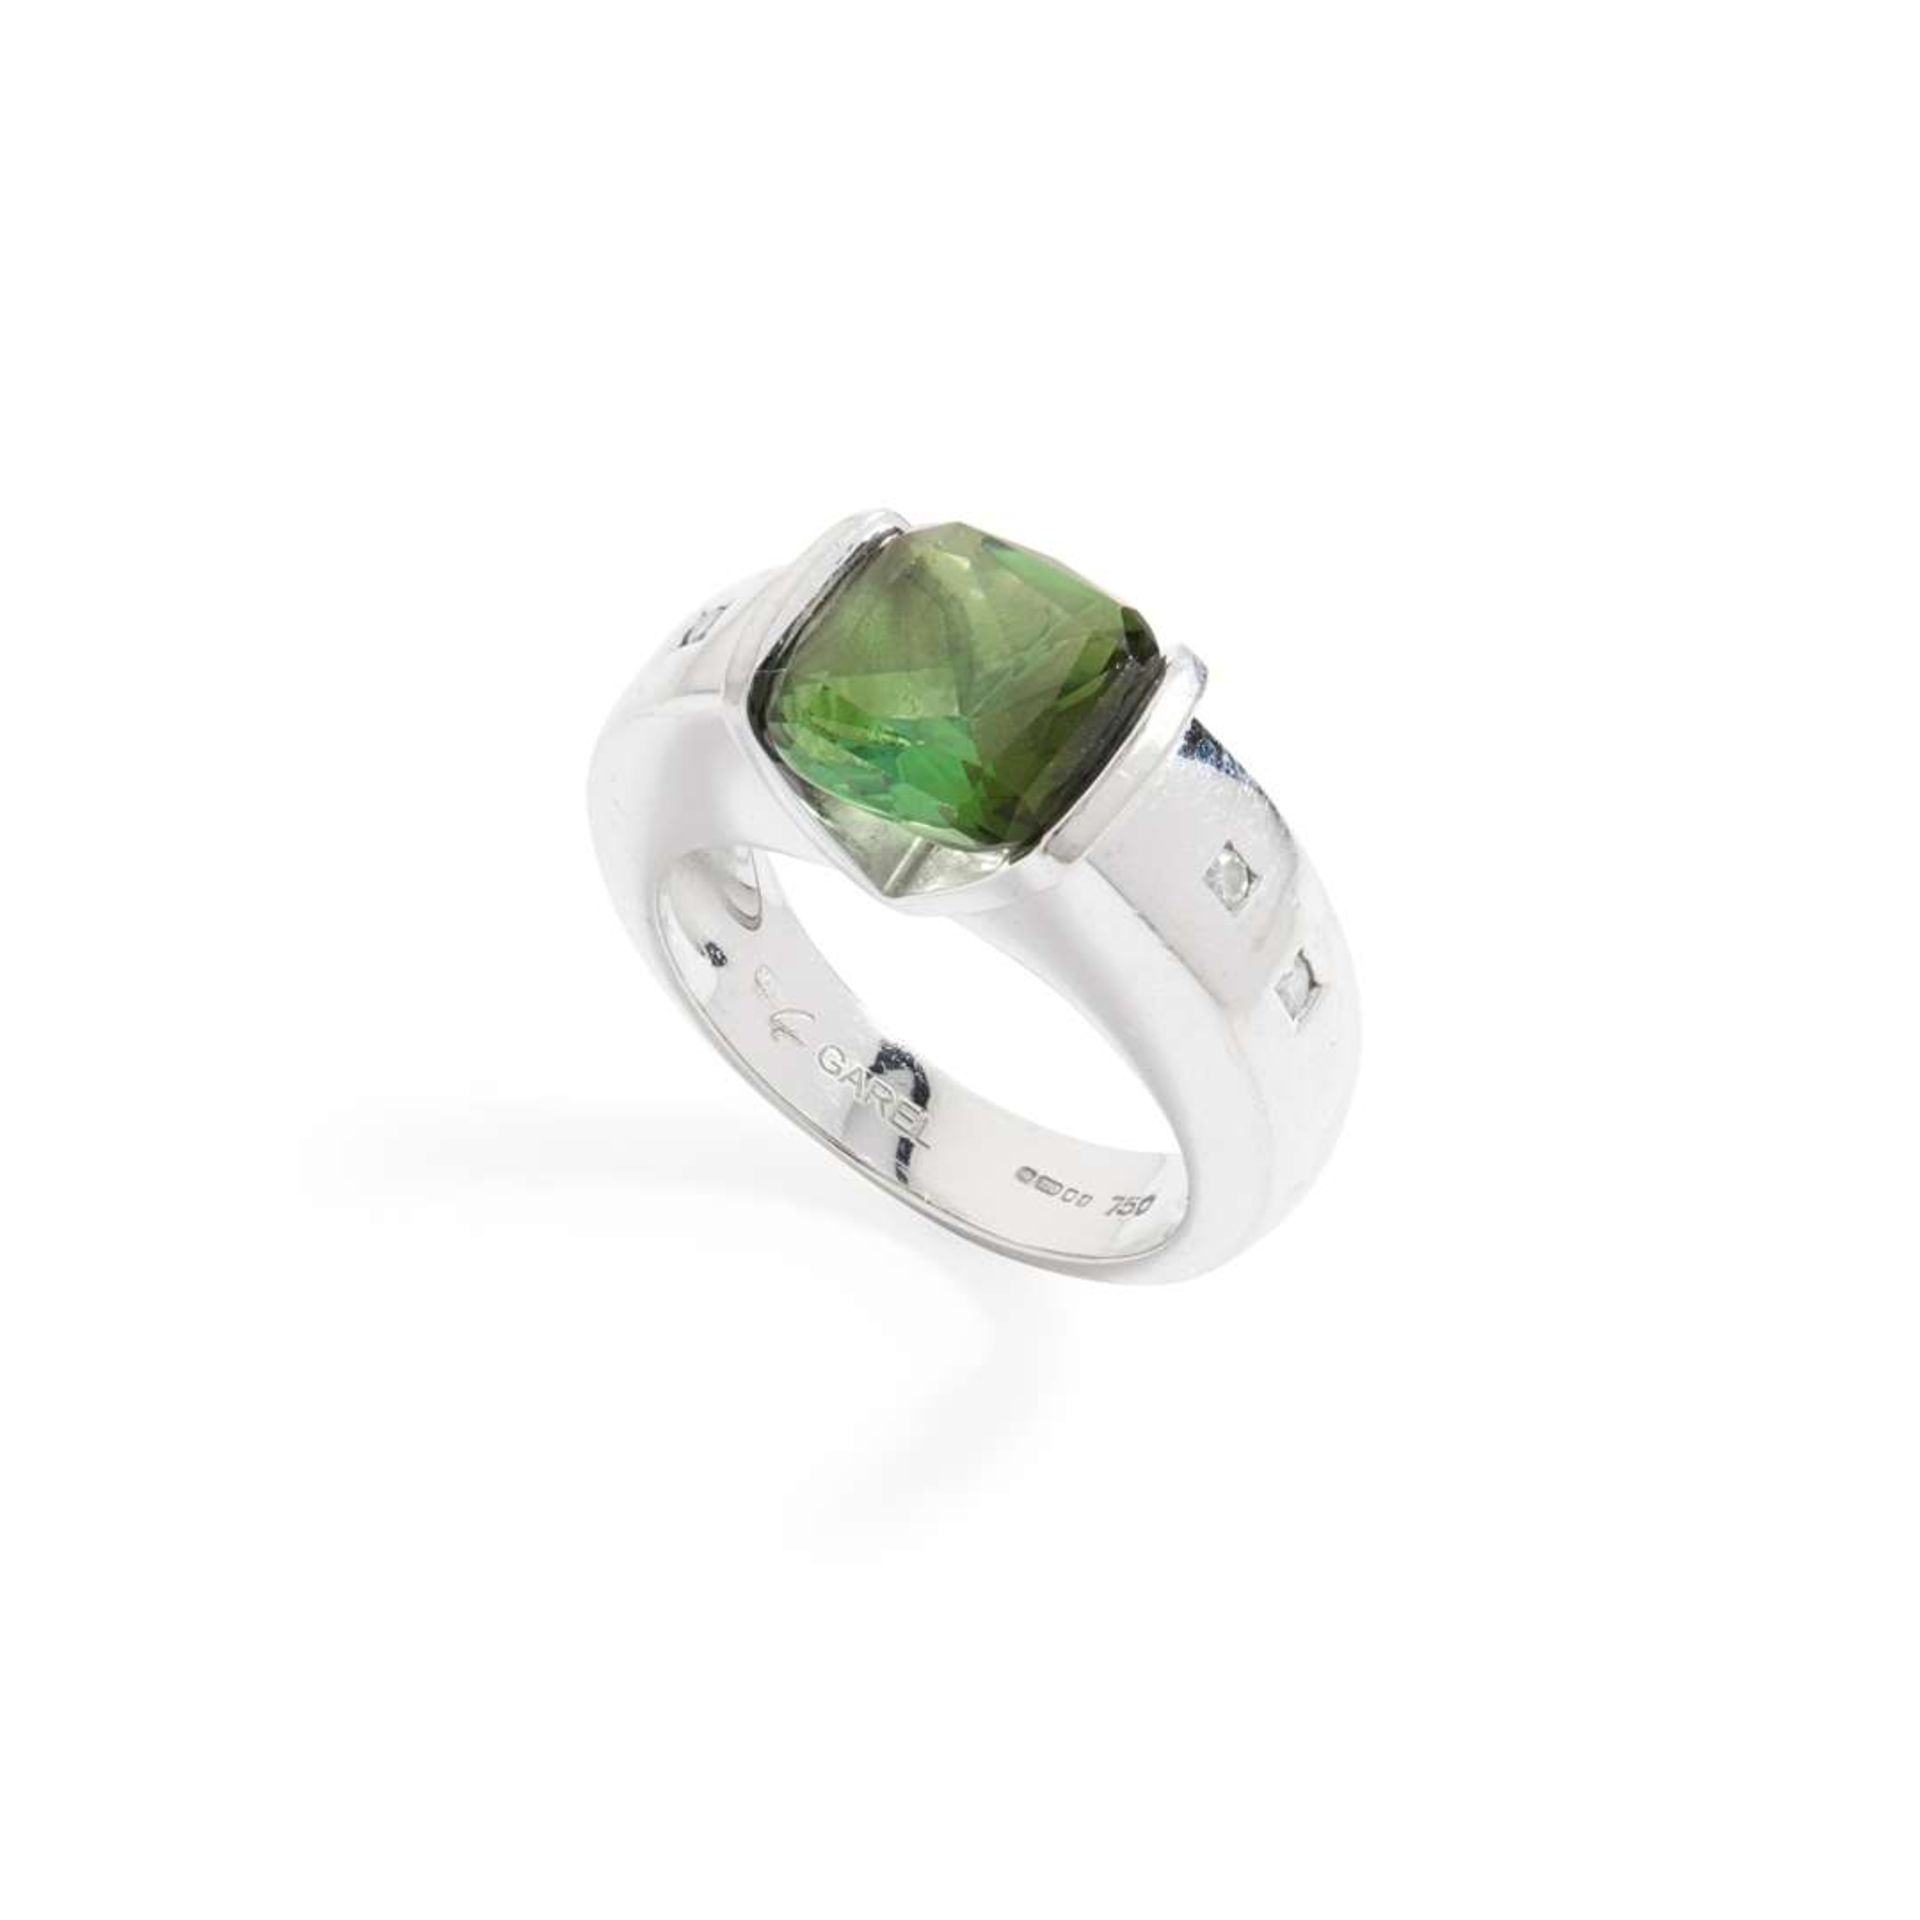 Mappin & Webb: An 18ct gold green tourmaline and diamond ring